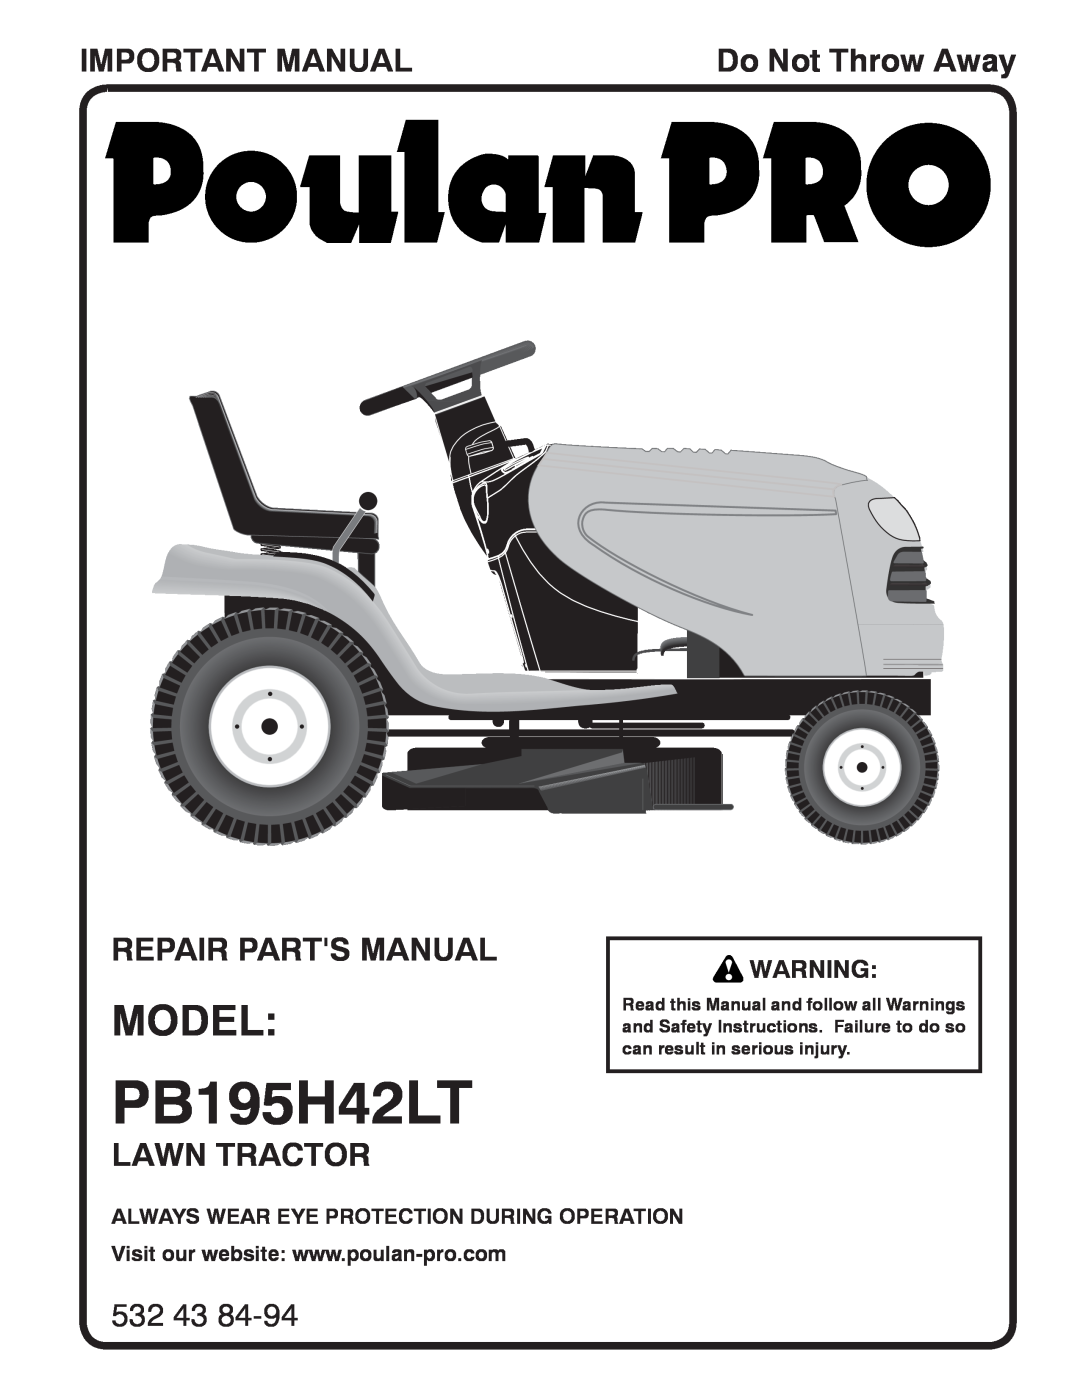 Poulan PB195H42LT manual Model, Important Manual, Repair Parts Manual, Lawn Tractor, 532, Do Not Throw Away 